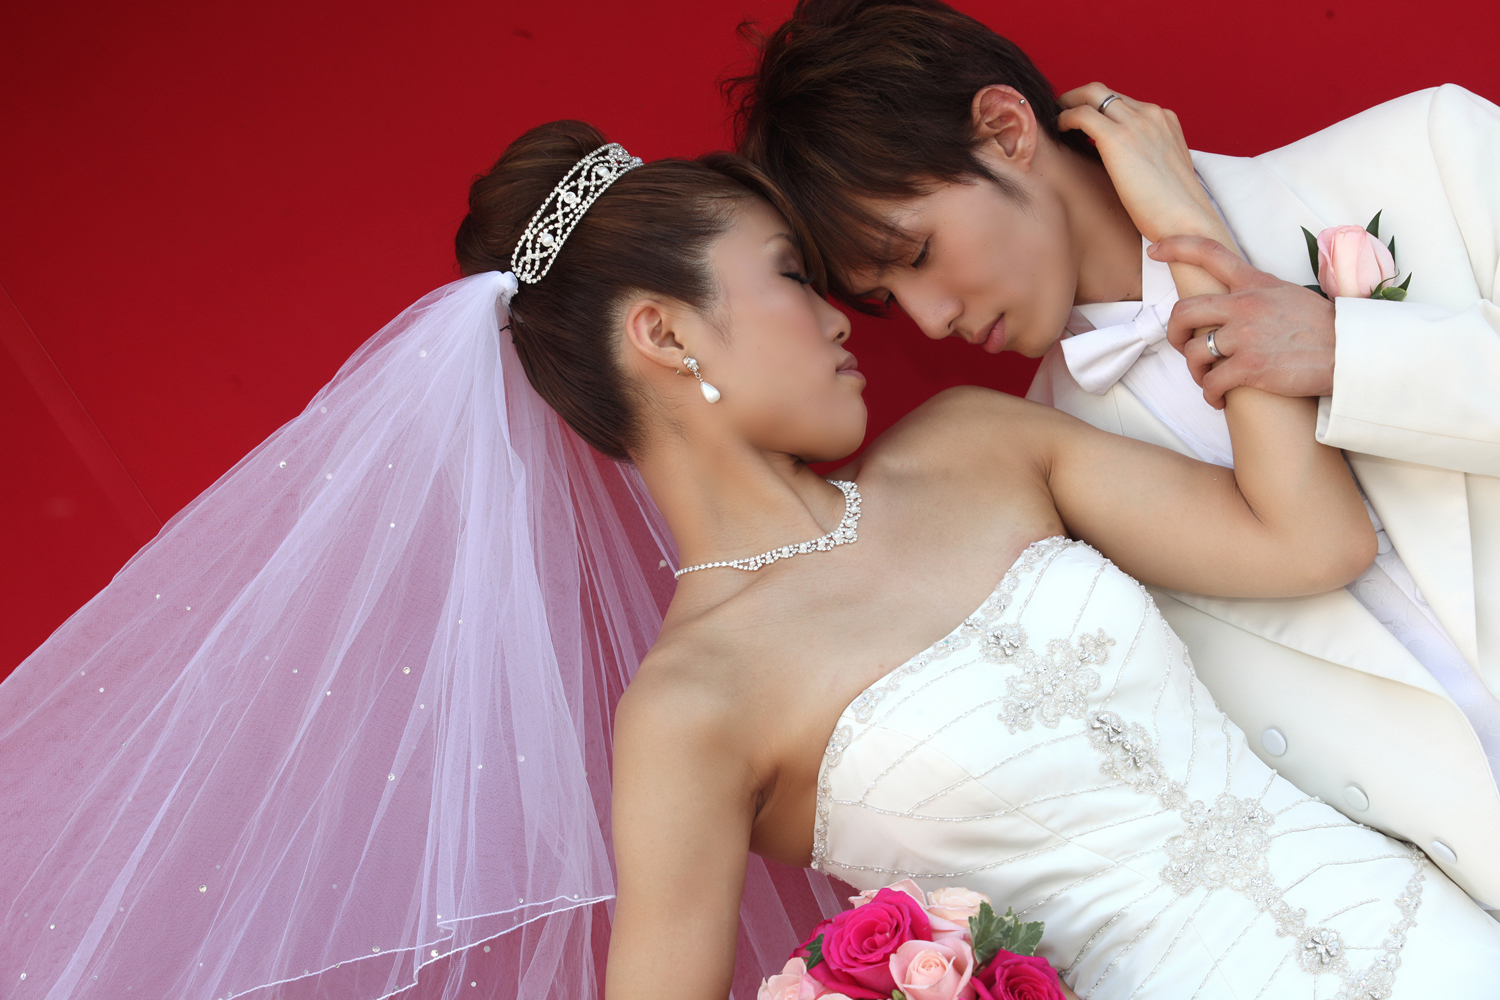 Rick-Ferro-Wedding-Couple-Japaneze.jpg